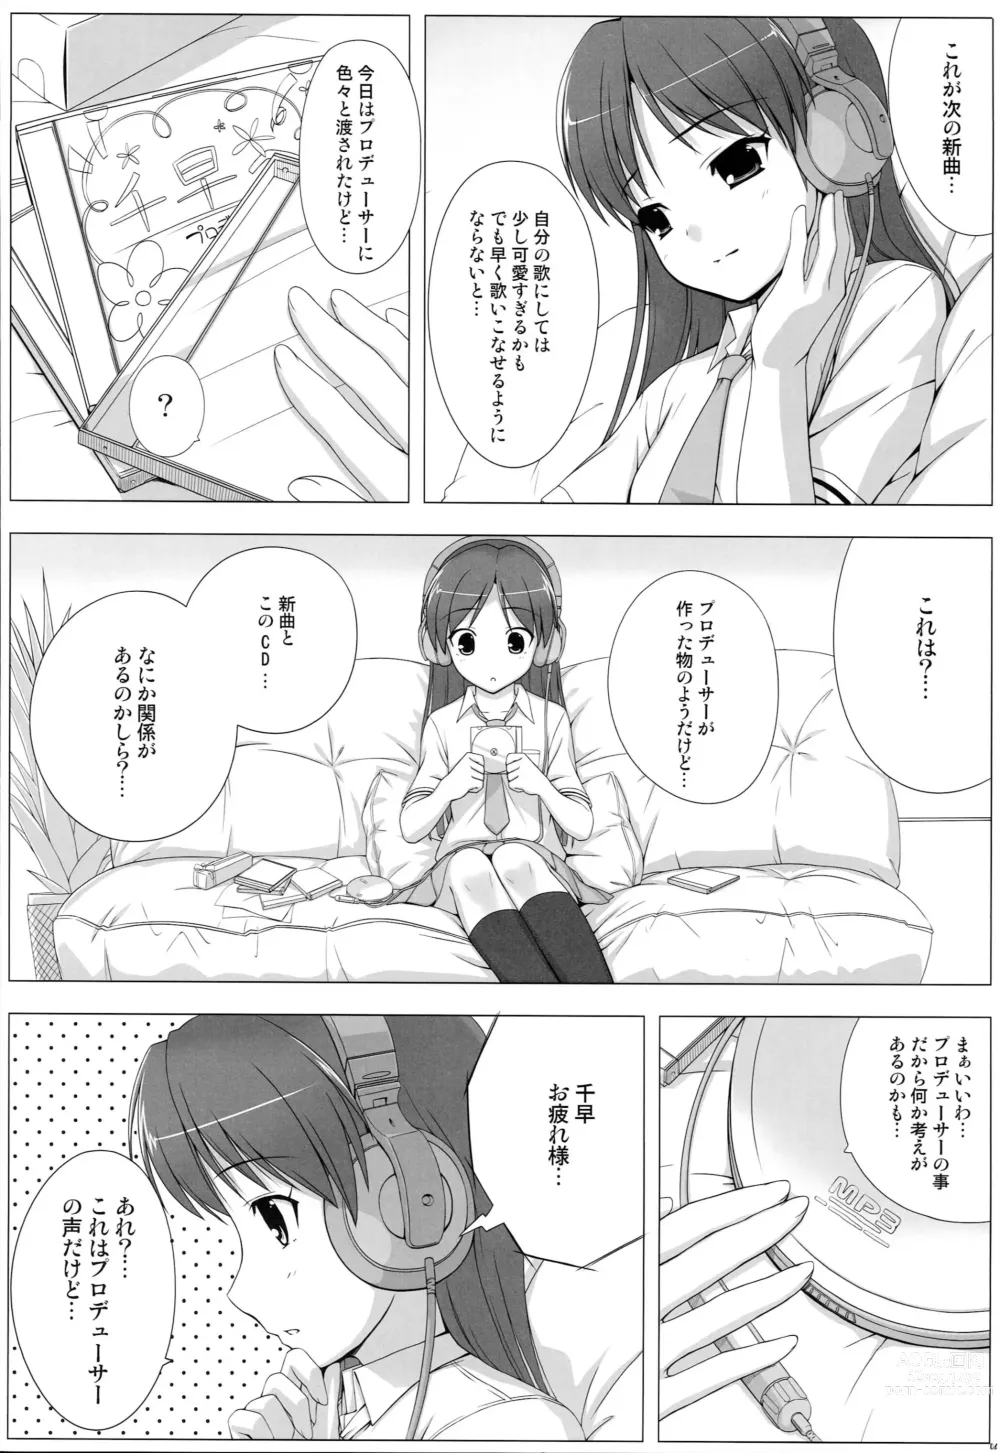 Page 5 of doujinshi BAD COMMUNICATION? 09